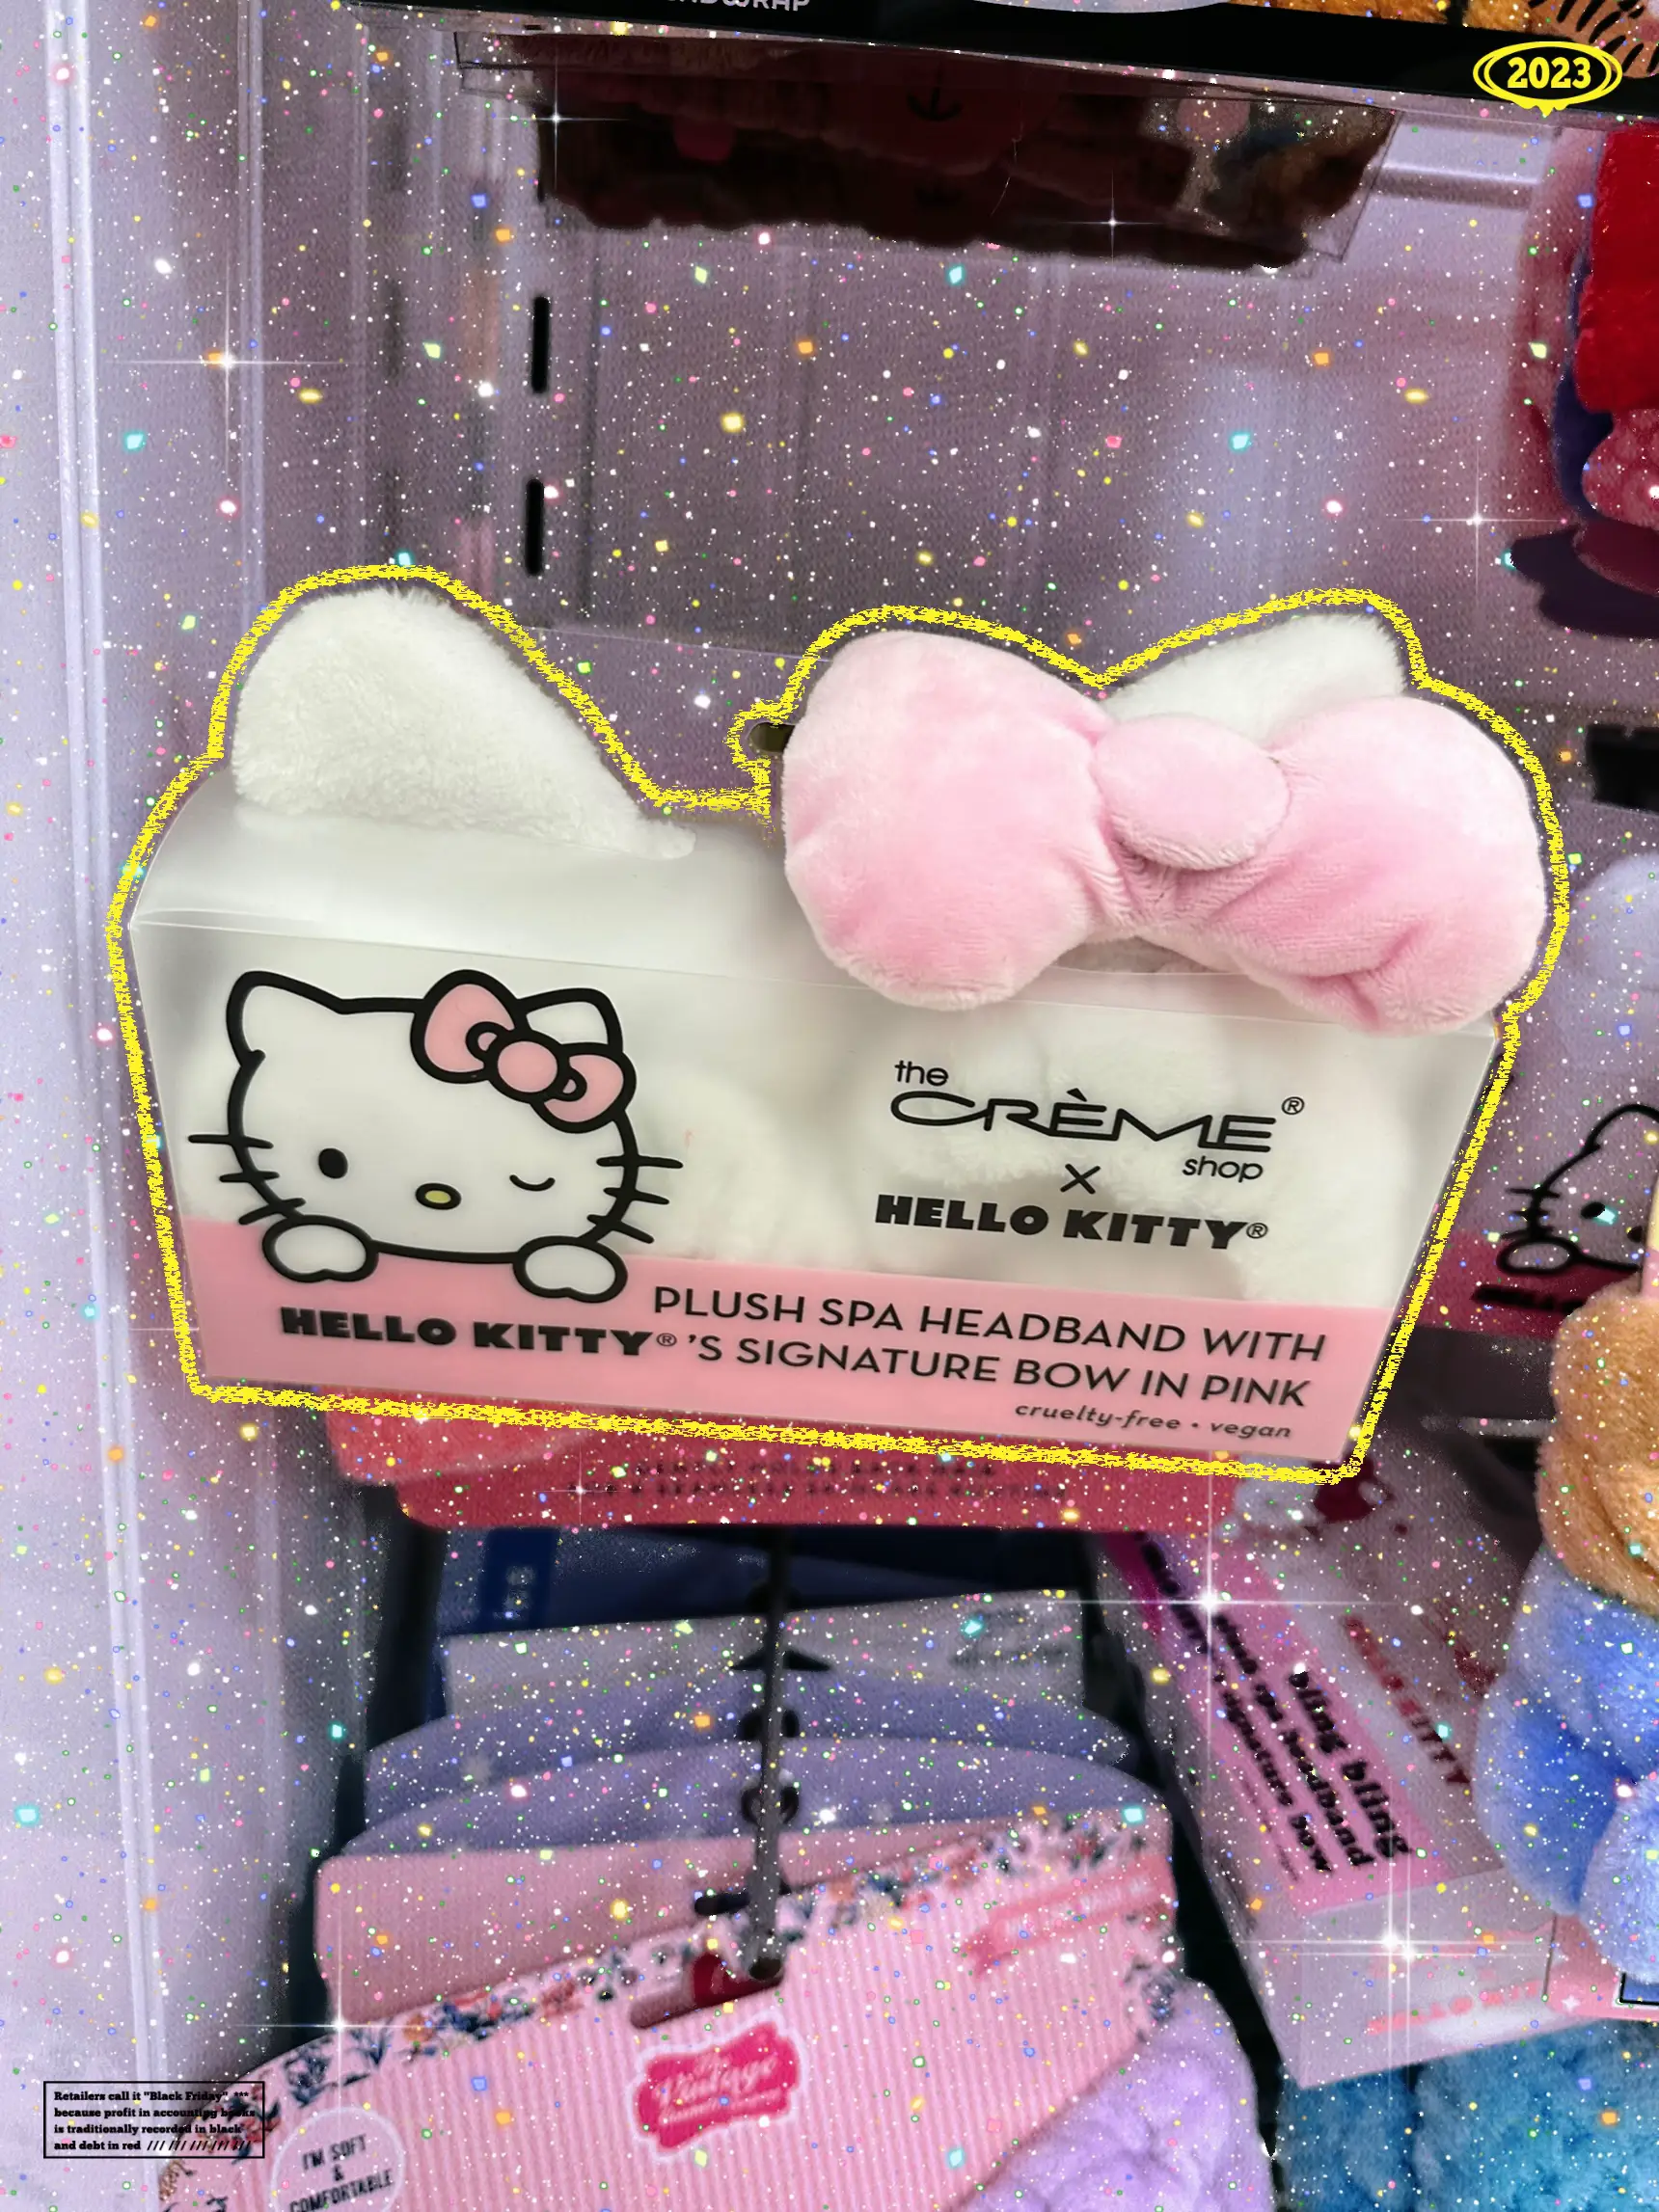 Hello Kitty - We ♥ Legwarmers! What a fashionable alternative to